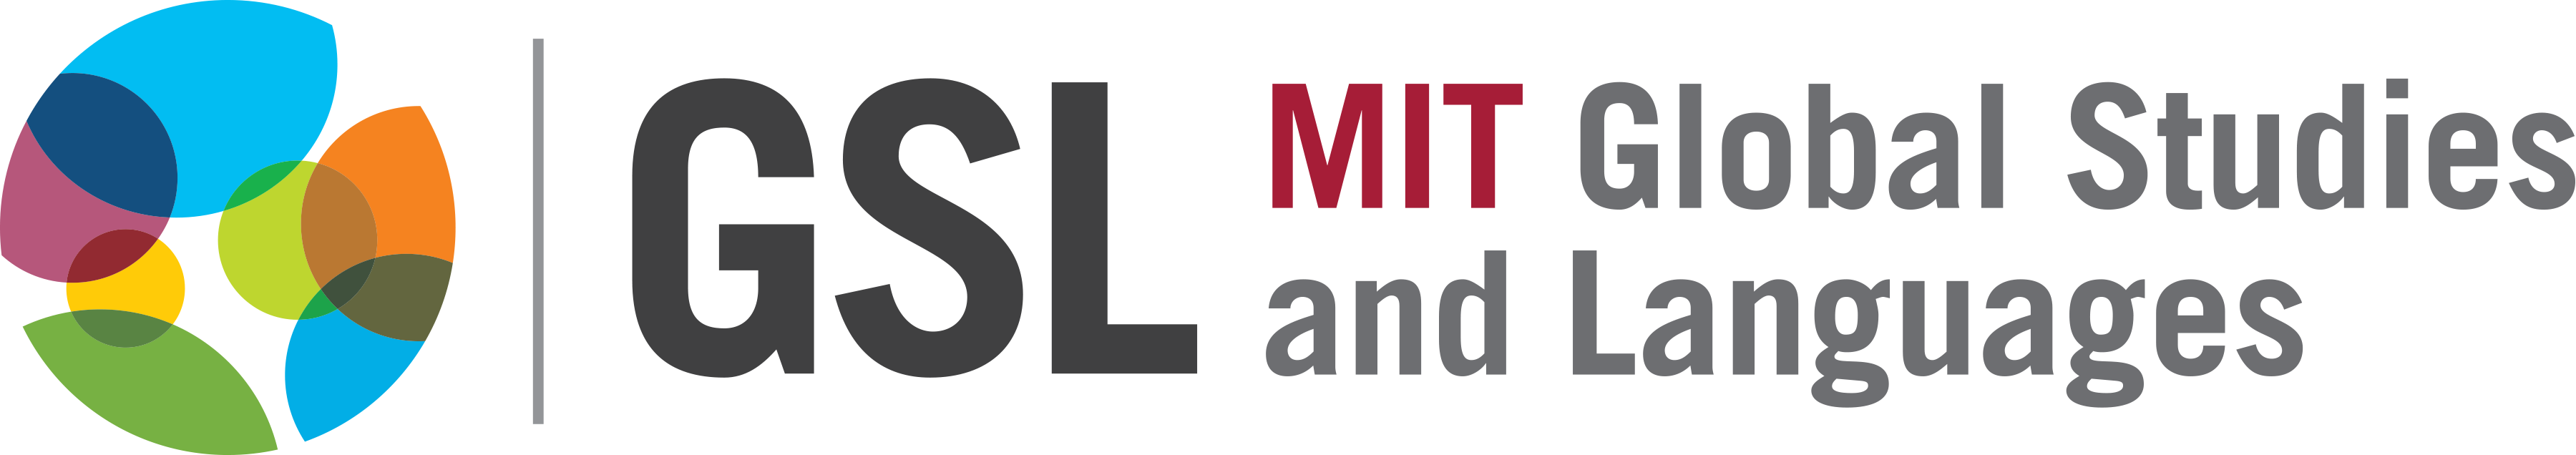 MIT Global Studies & Languages